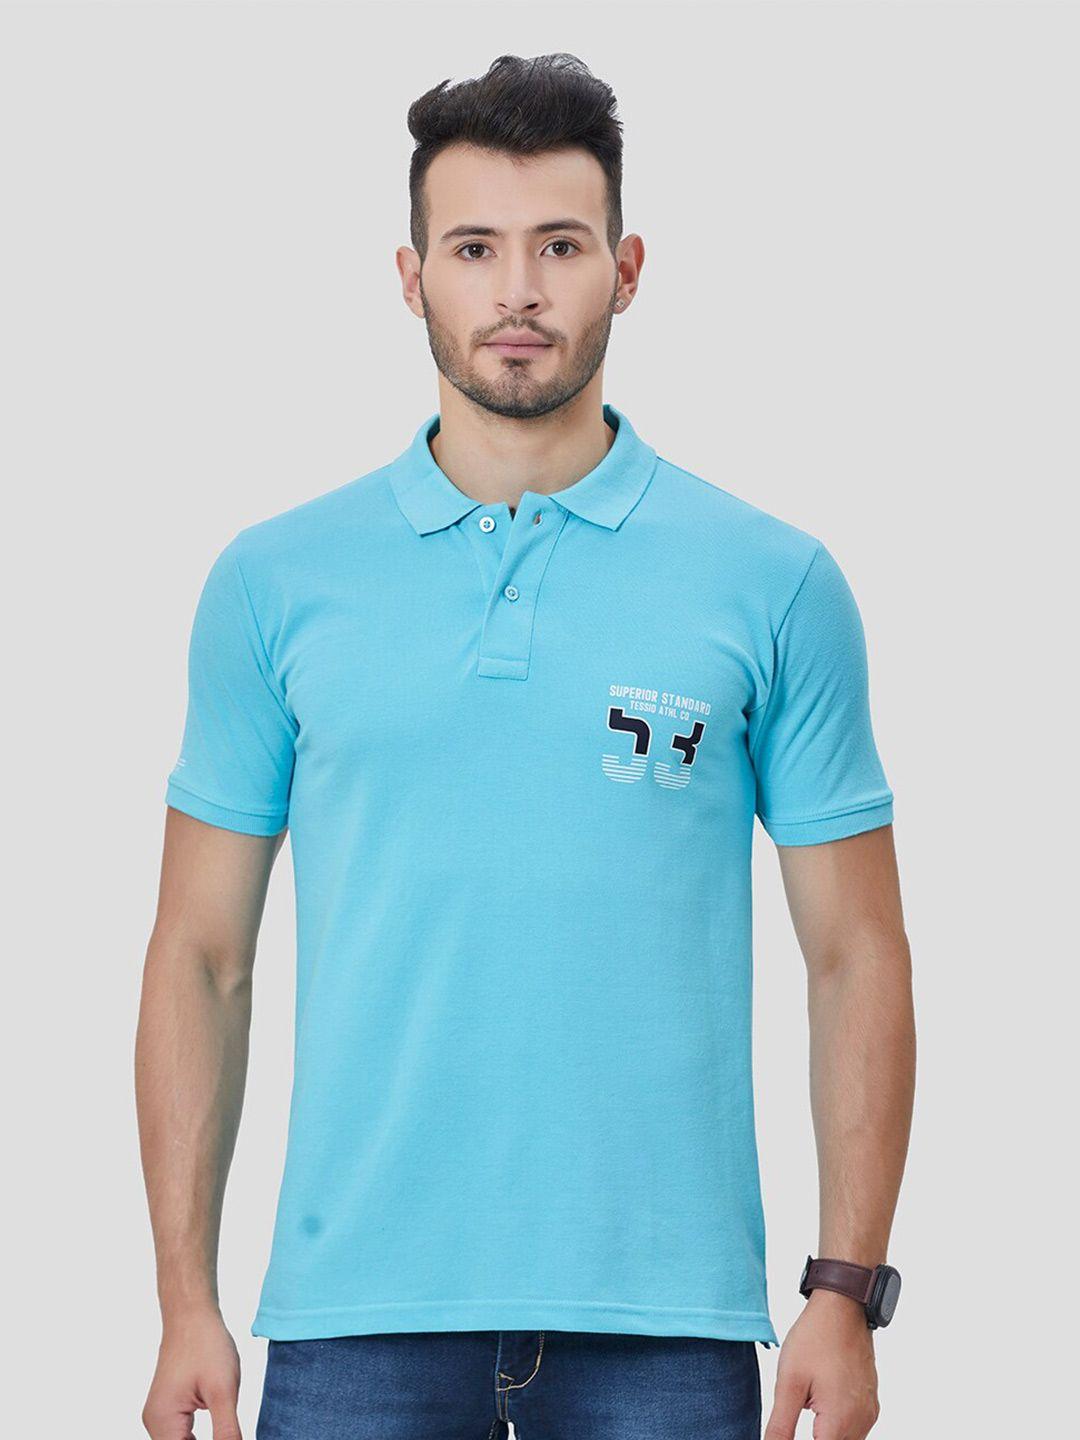 tessio men turquoise blue henley neck pockets t-shirt